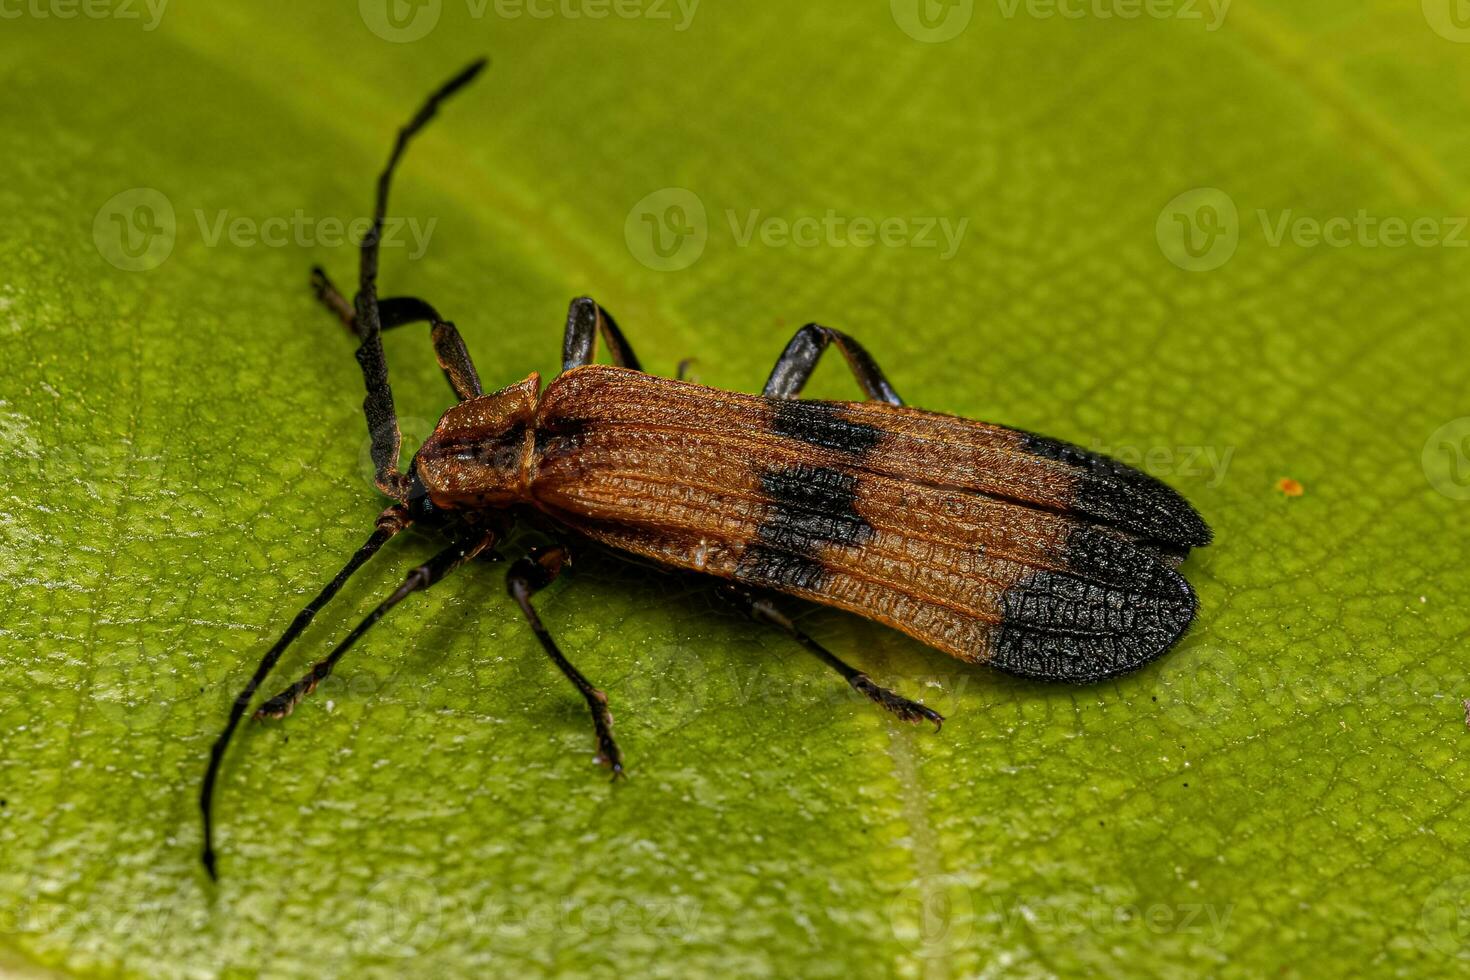 Adult Net-winged Beetle photo